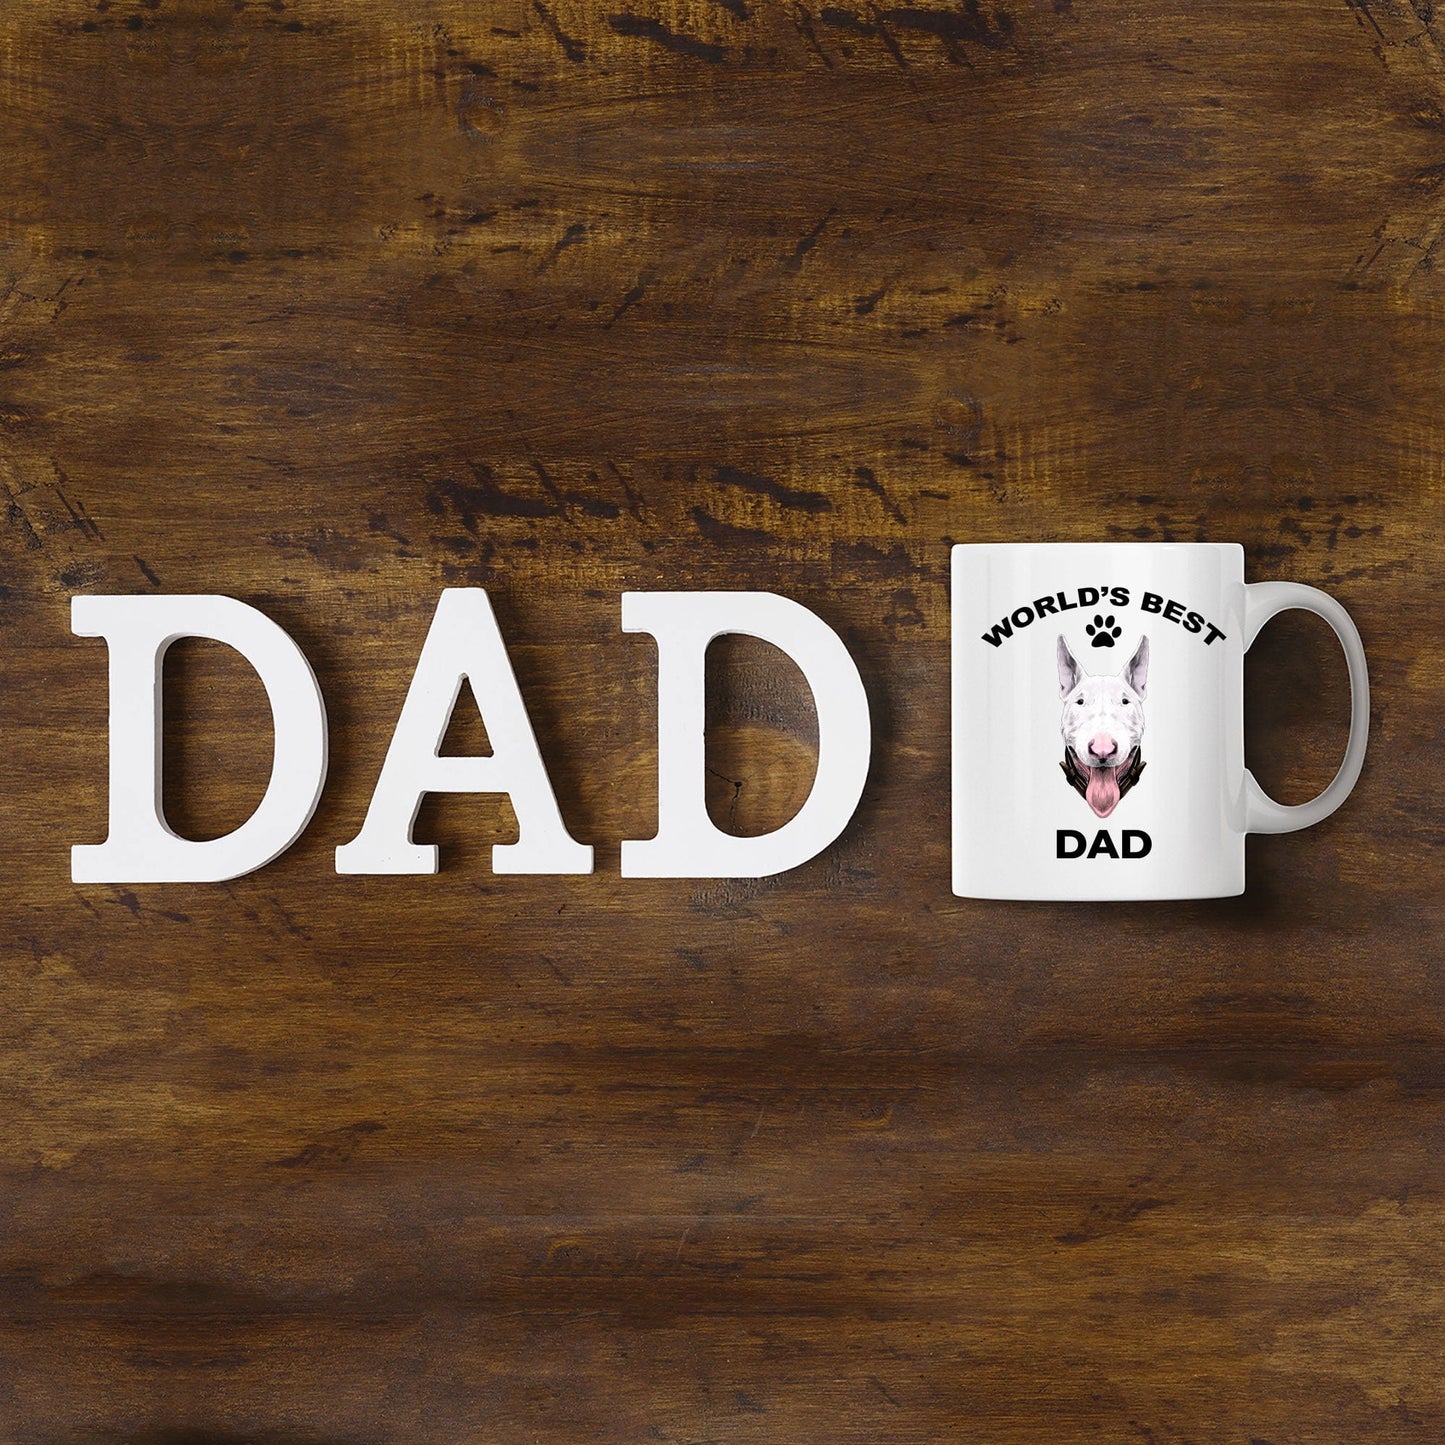 Bull Terrier Dog Dad Coffee Mug